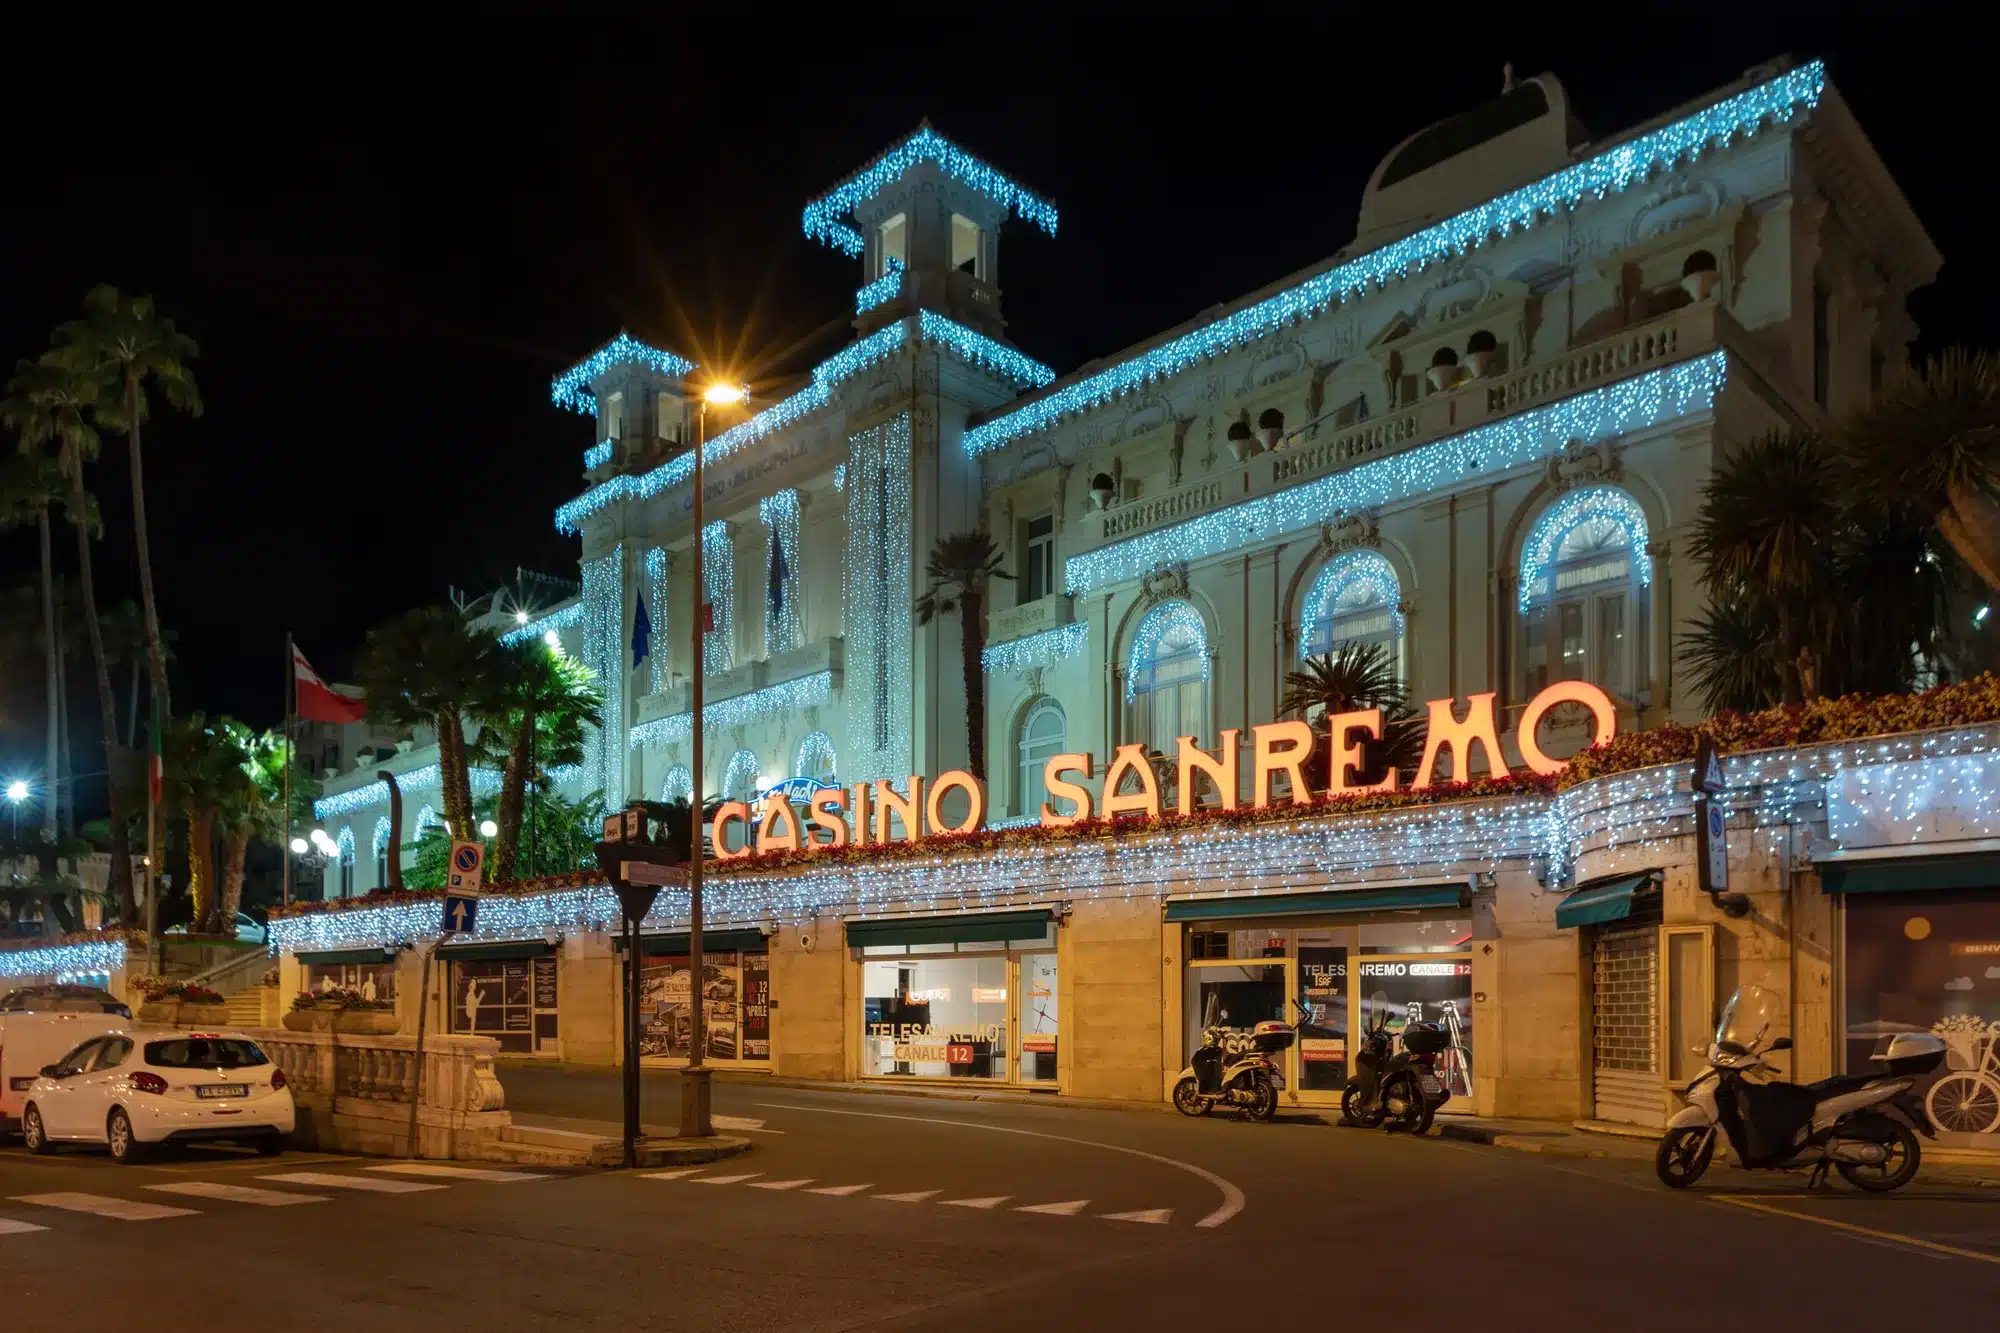 San-Remo-Casino real-estate-i-Sydeuropa